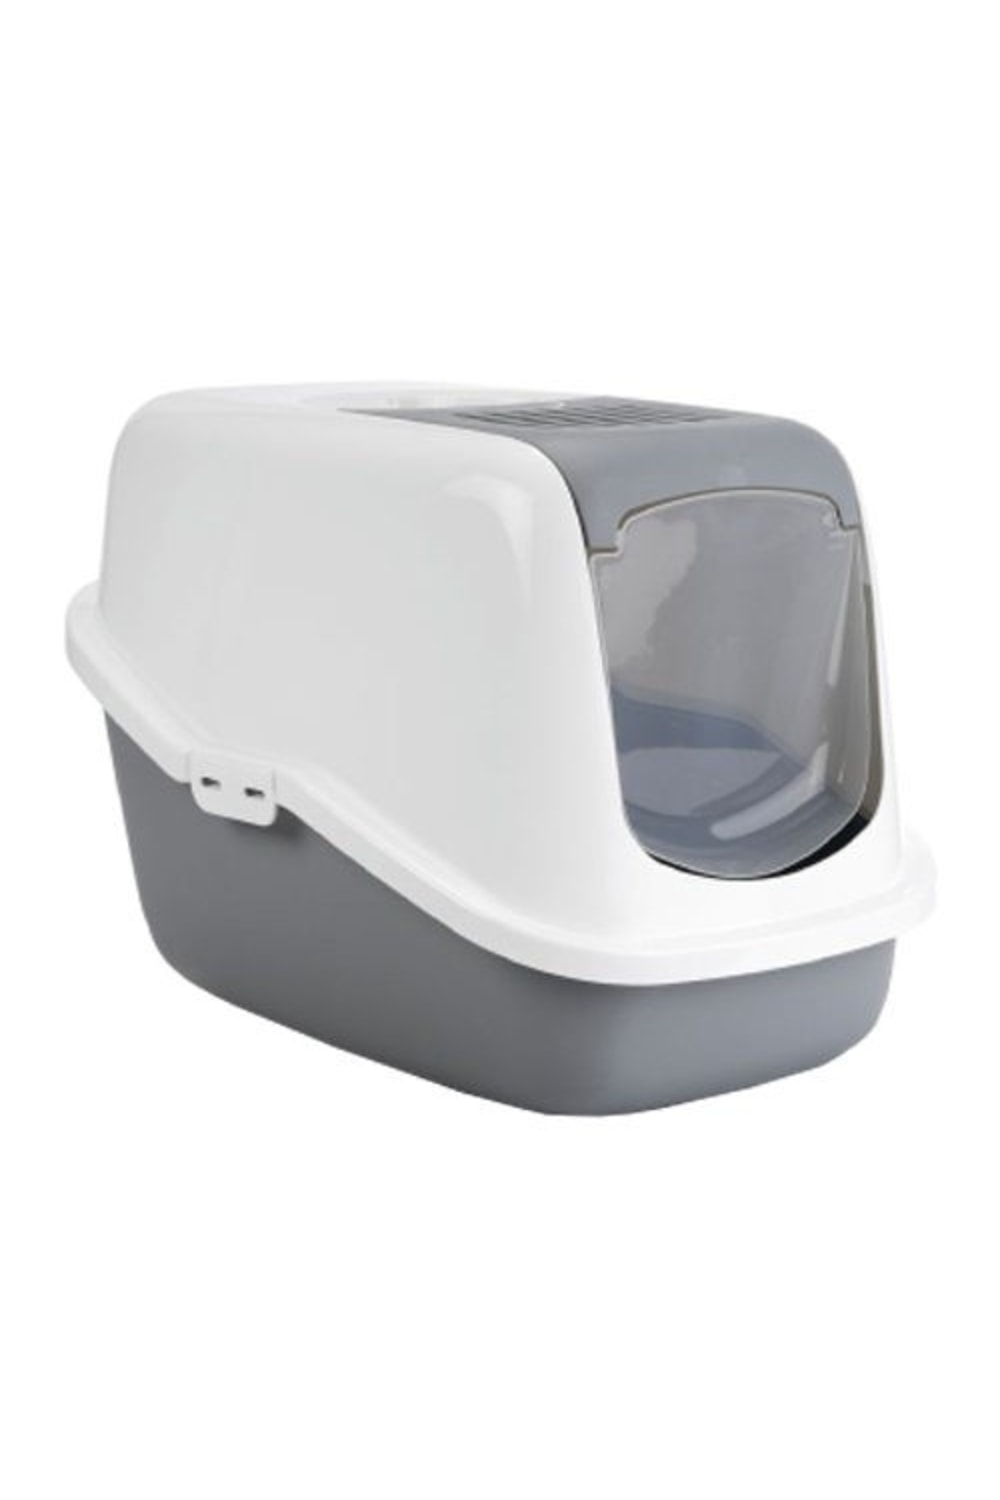 Savic Nestor Cat Toilet Home (White/Gray) (One Size)